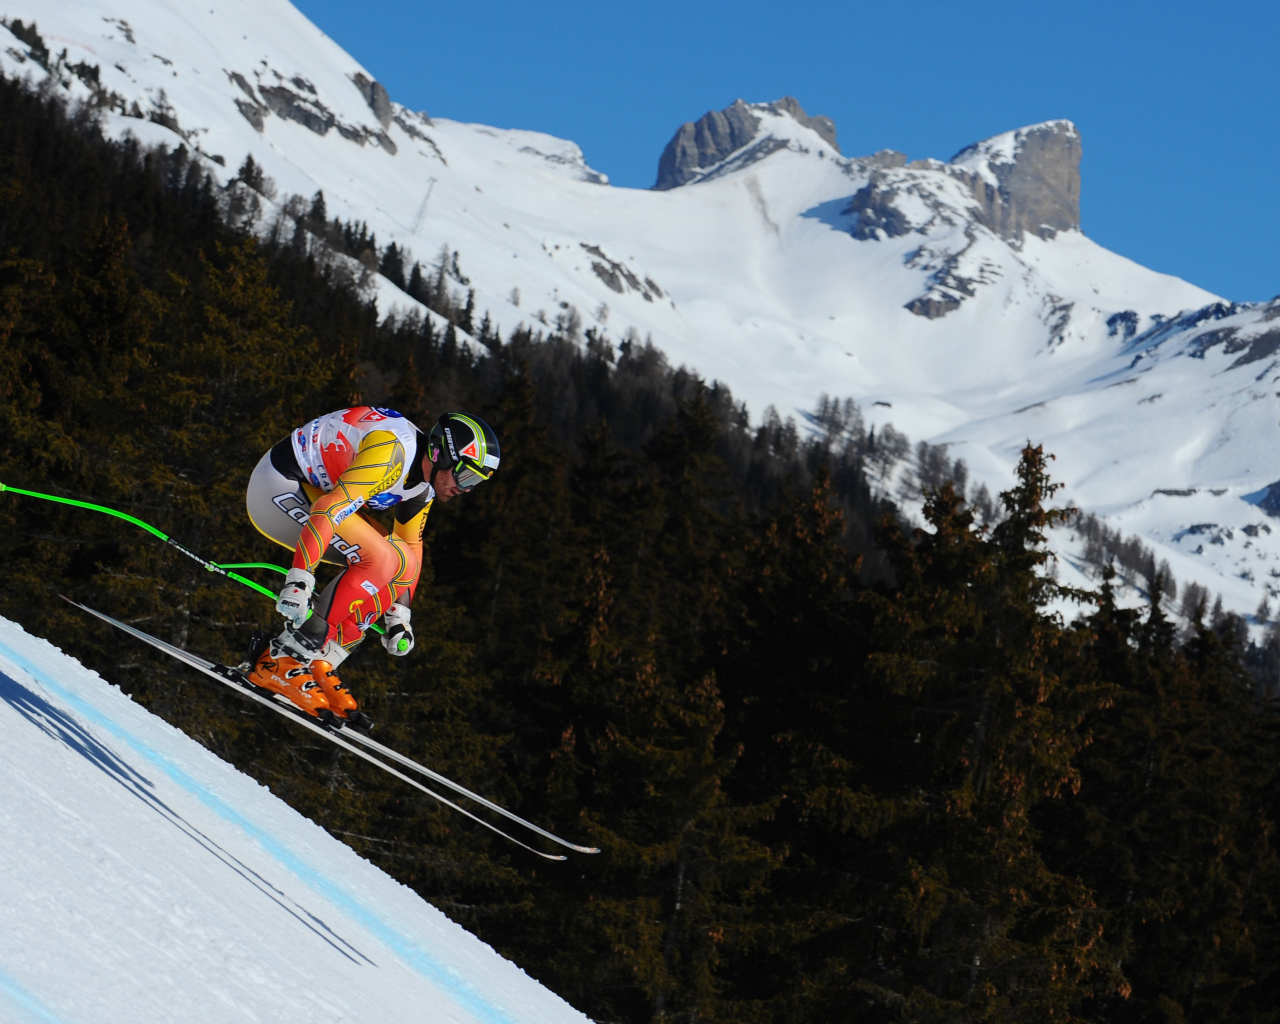 Canadian skier Jan Hudec bronze medalist in Sochi